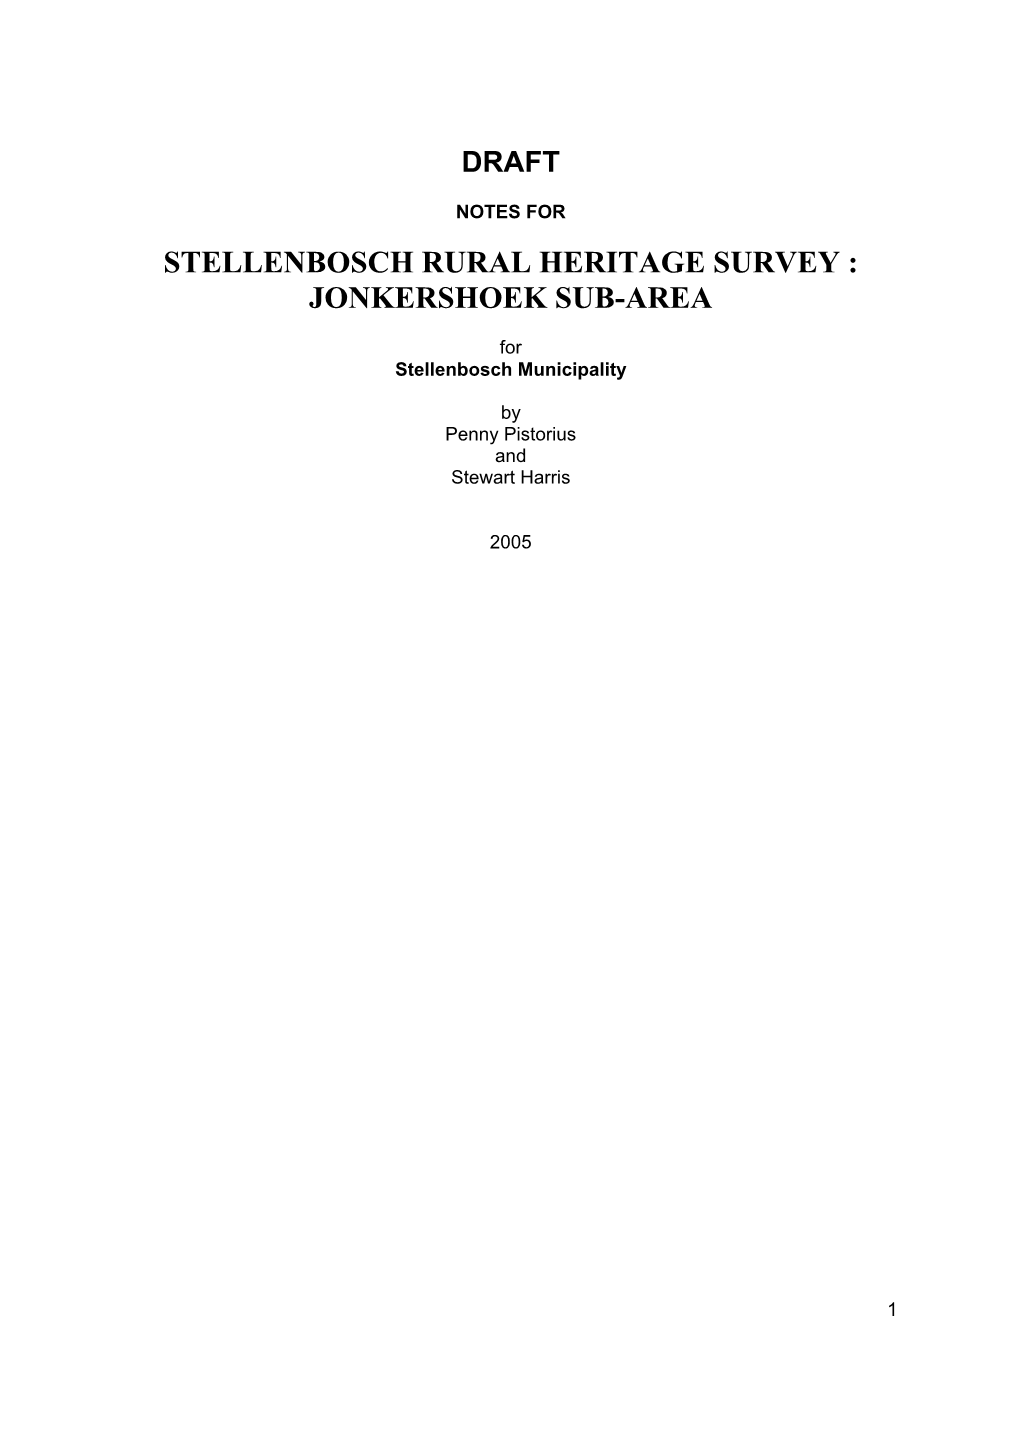 Stellenbosch Rural Heritage Survey : Jonkershoek Sub-Area